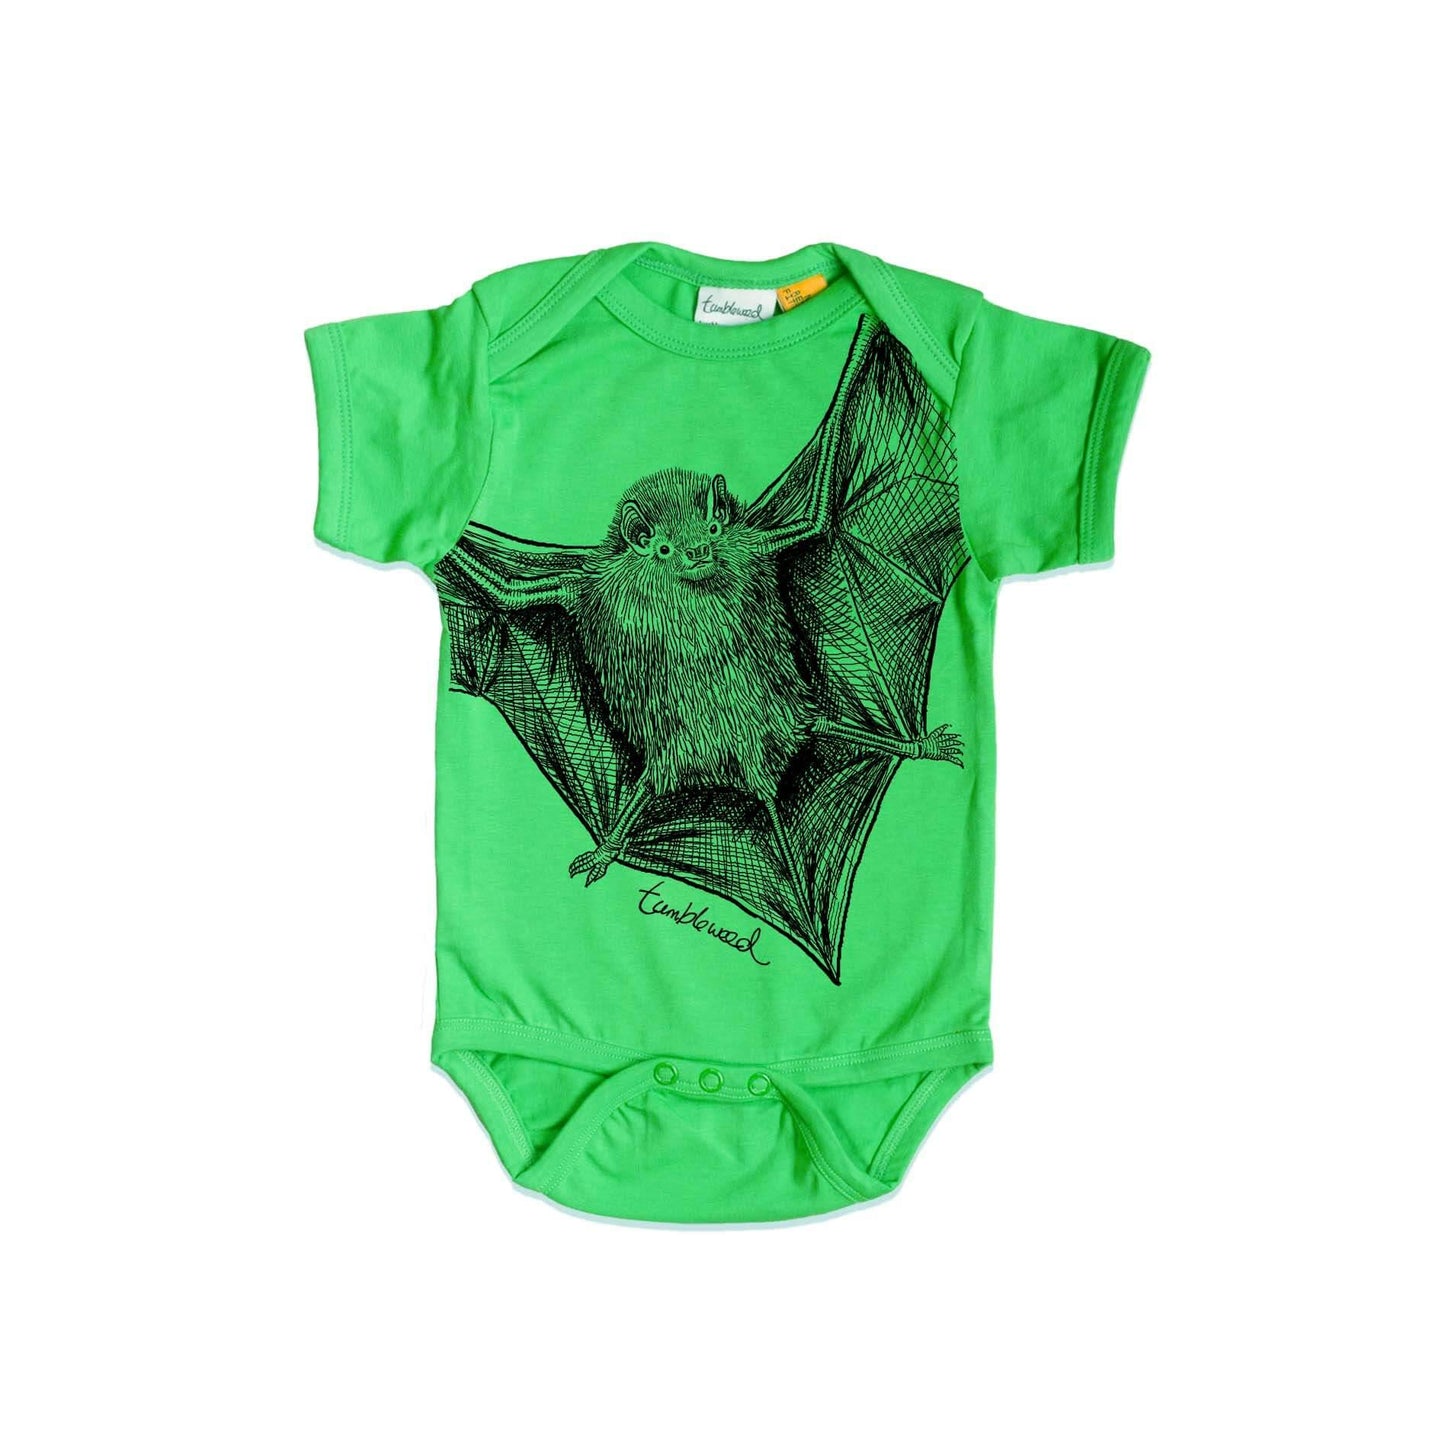 Short sleeved, green, organic cotton, baby onesie featuring a screen printed bat/pekapeka design.
 design.